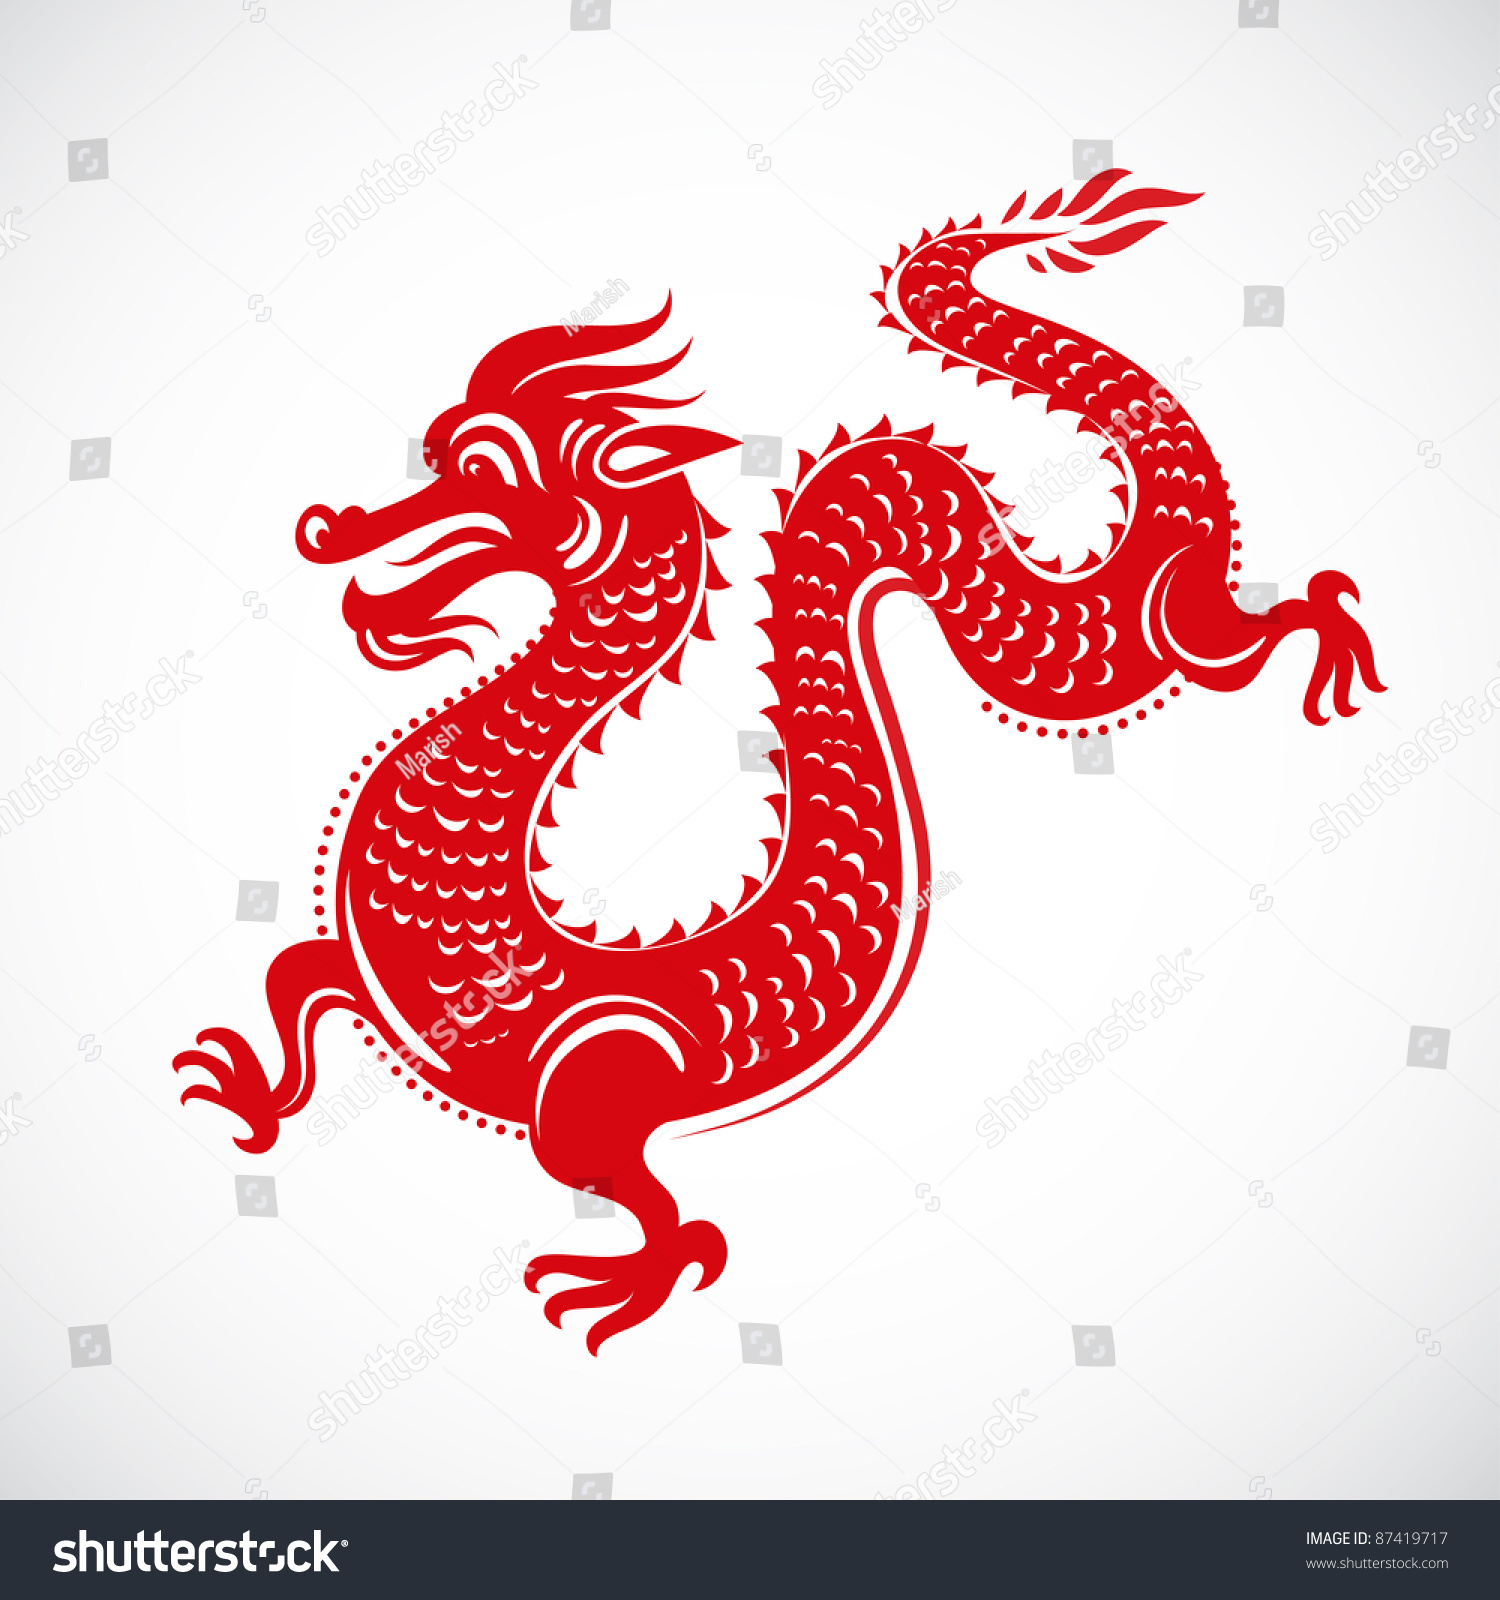 Year Of Dragon, Chinese New Year Stock Photo 87419717 : Shutterstock